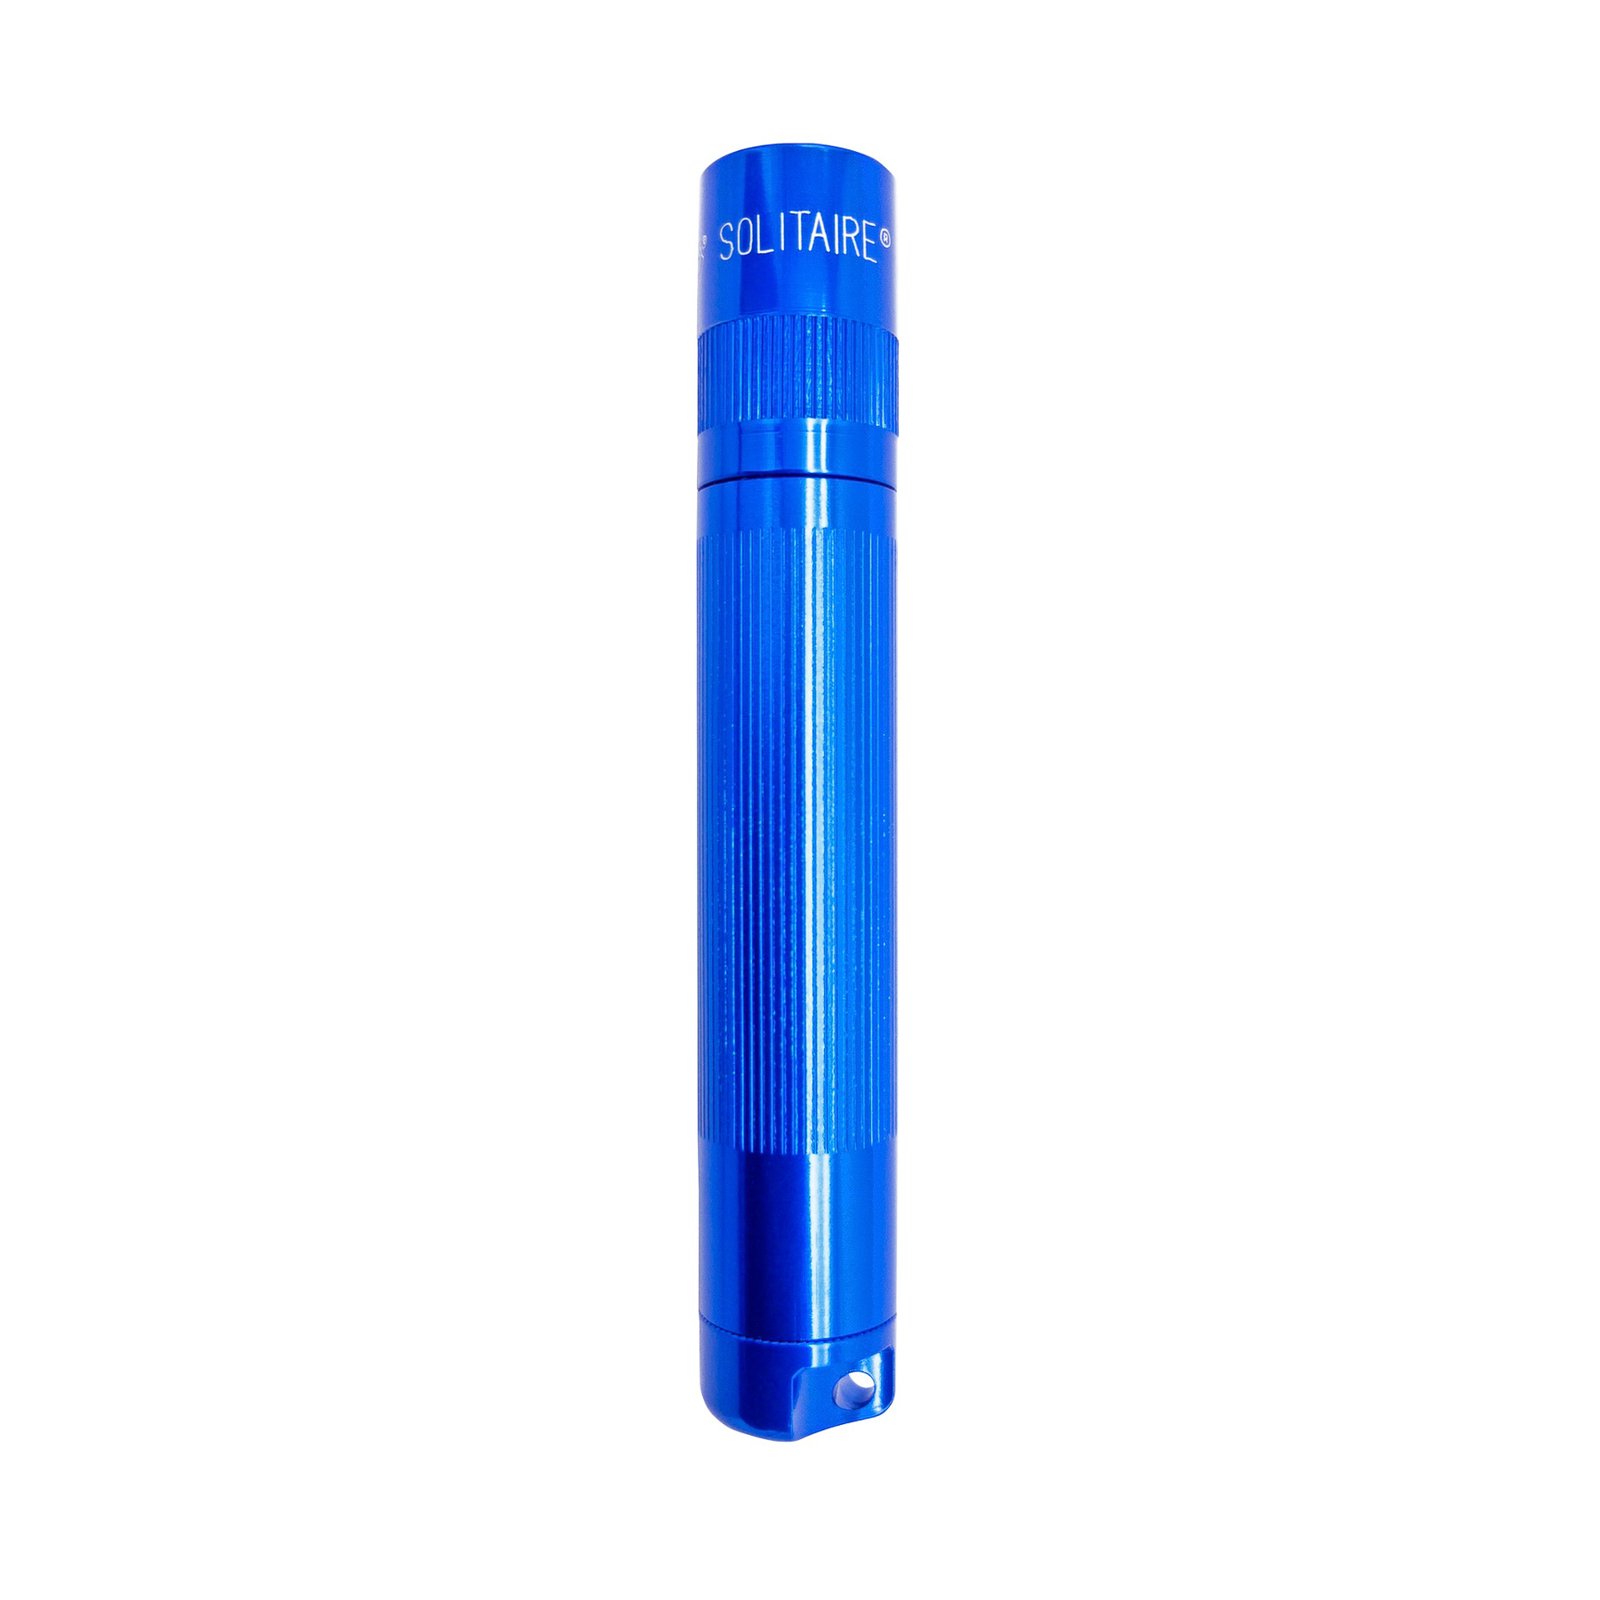 Lanterna Maglite Xenon Solitaire 1 Cell AAA, Box, azul